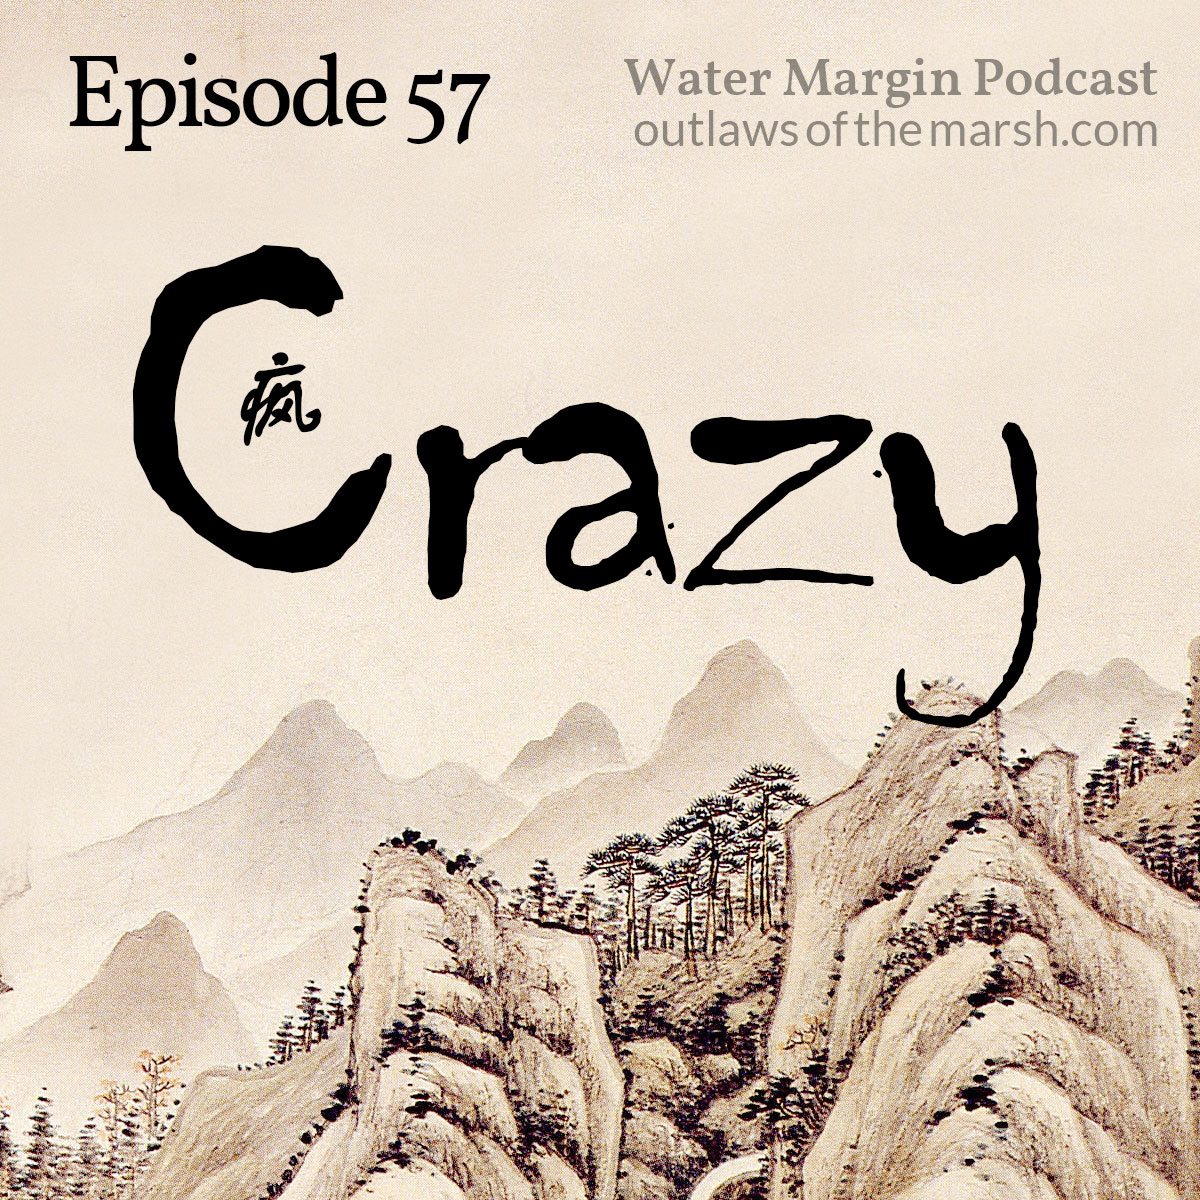 Water Margin Podcast: Episode 057